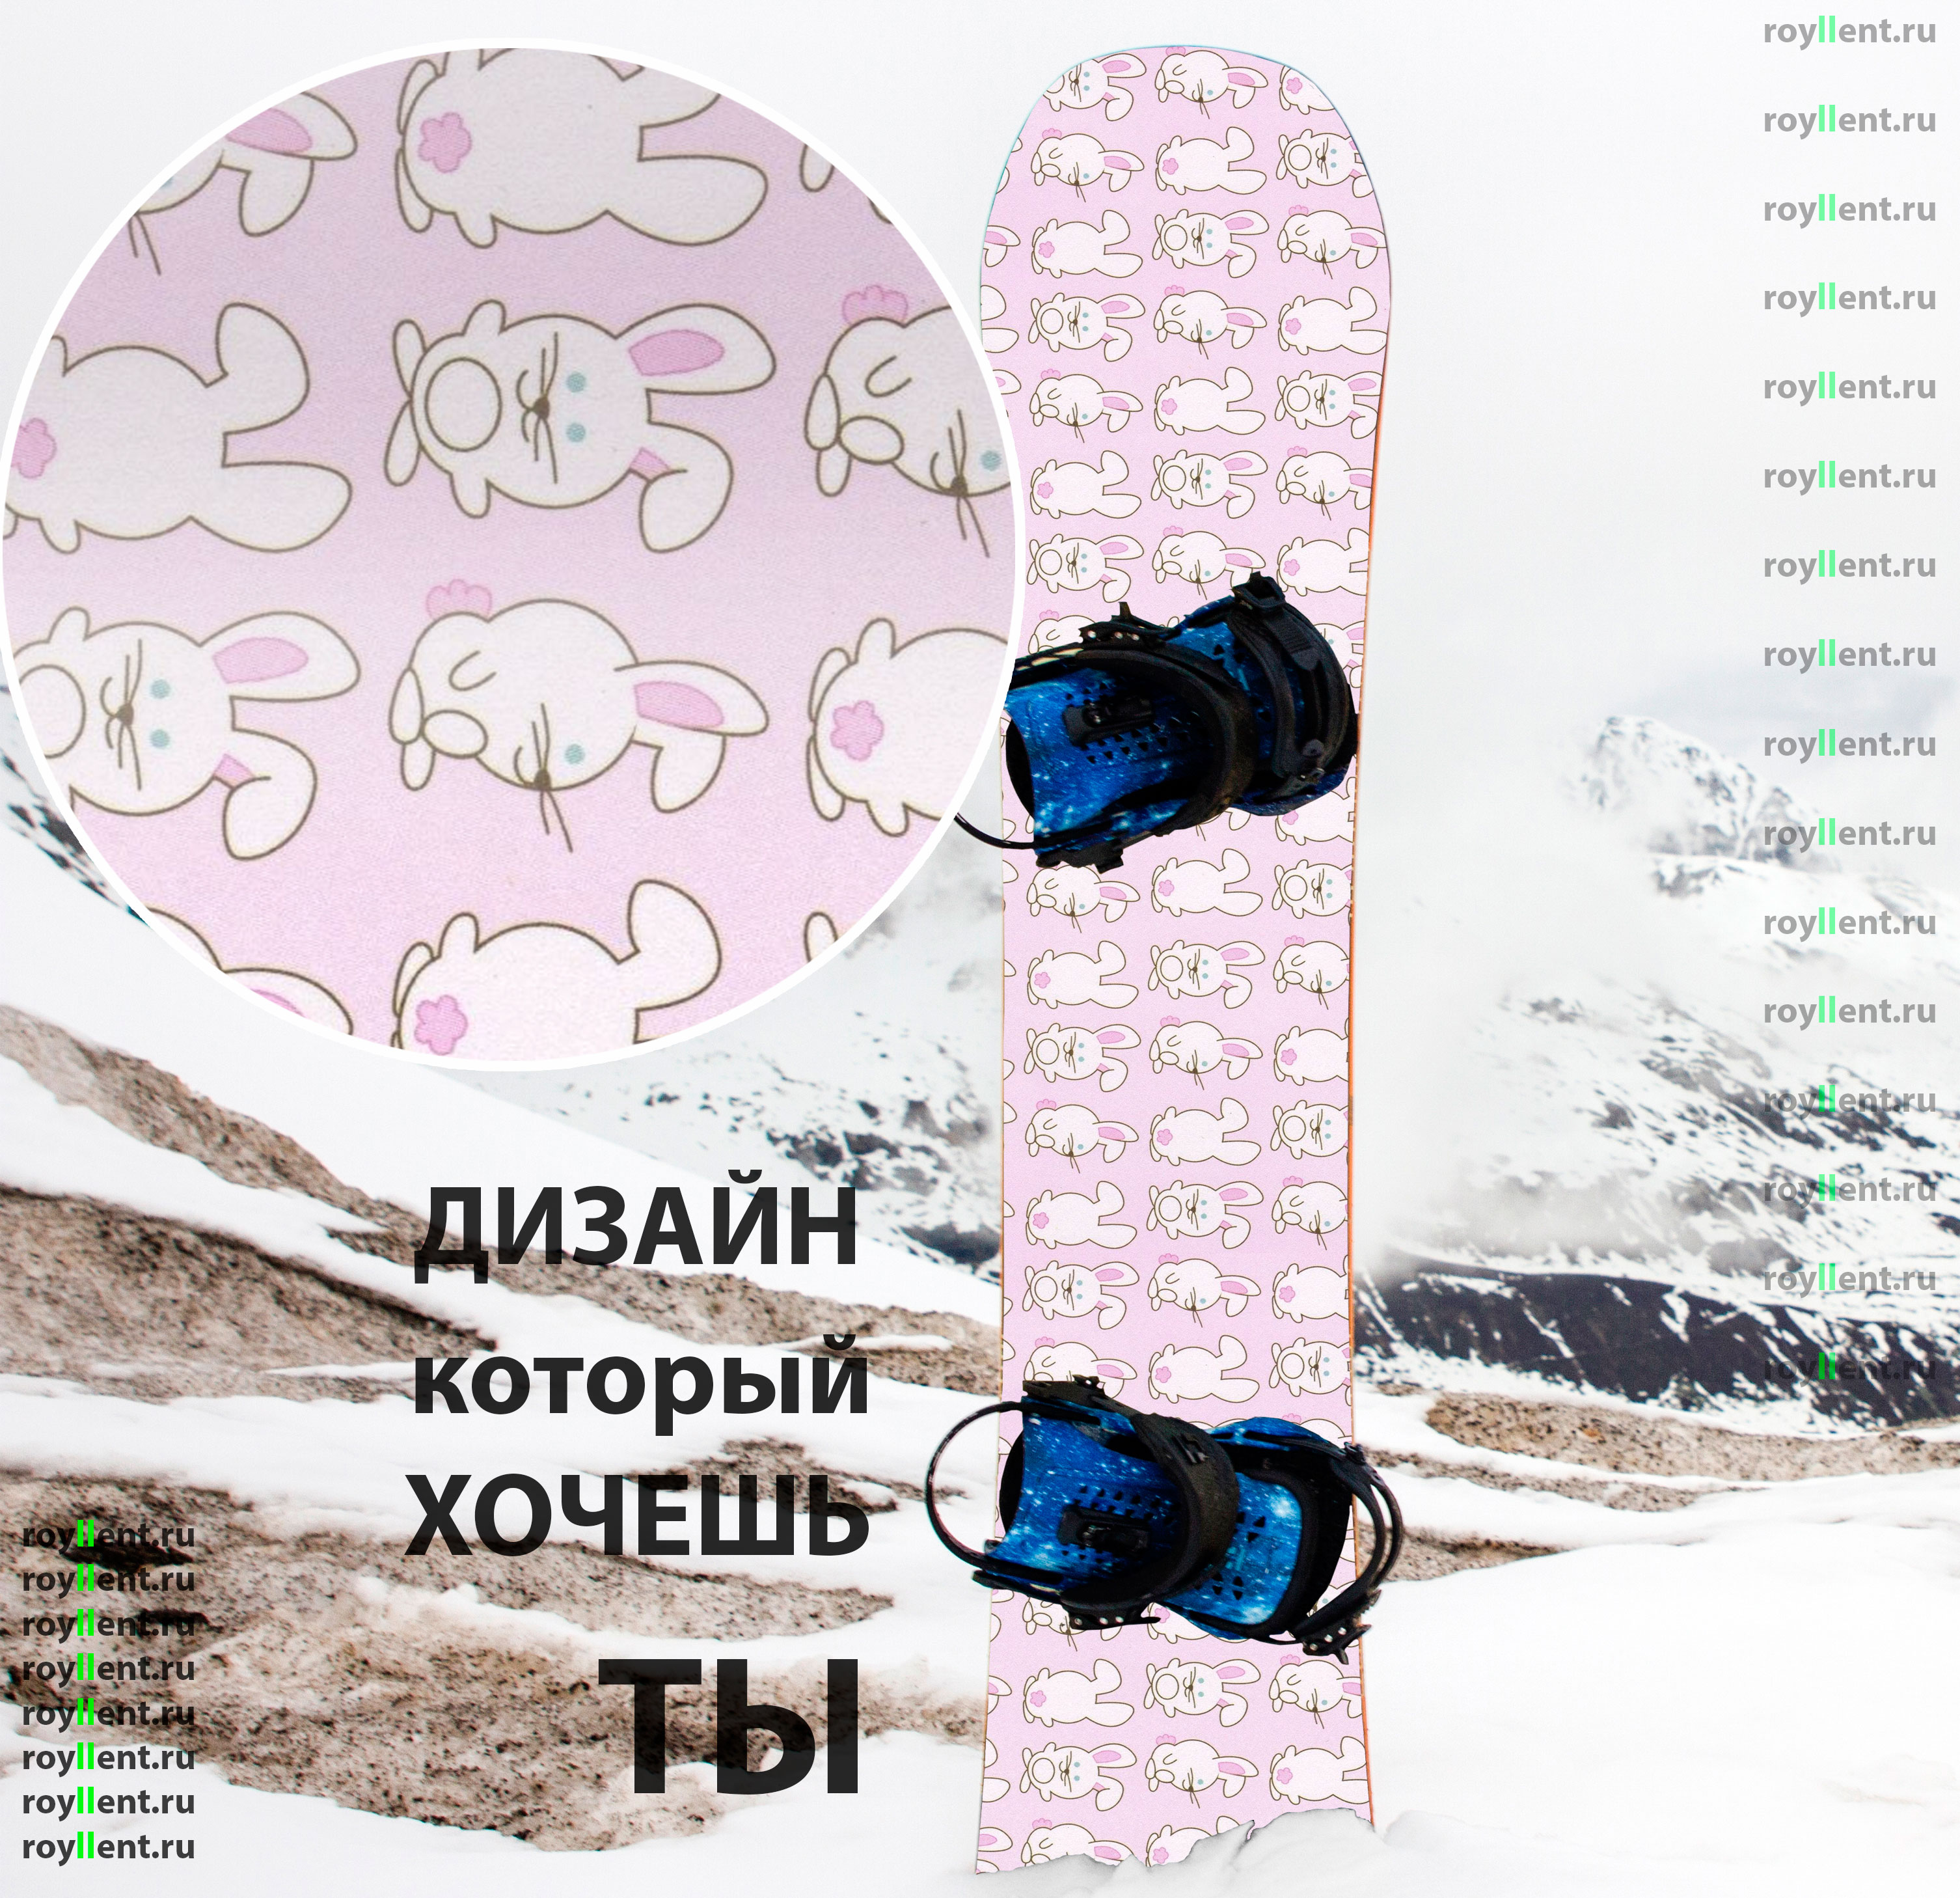 White rabbit snowboard design 2016